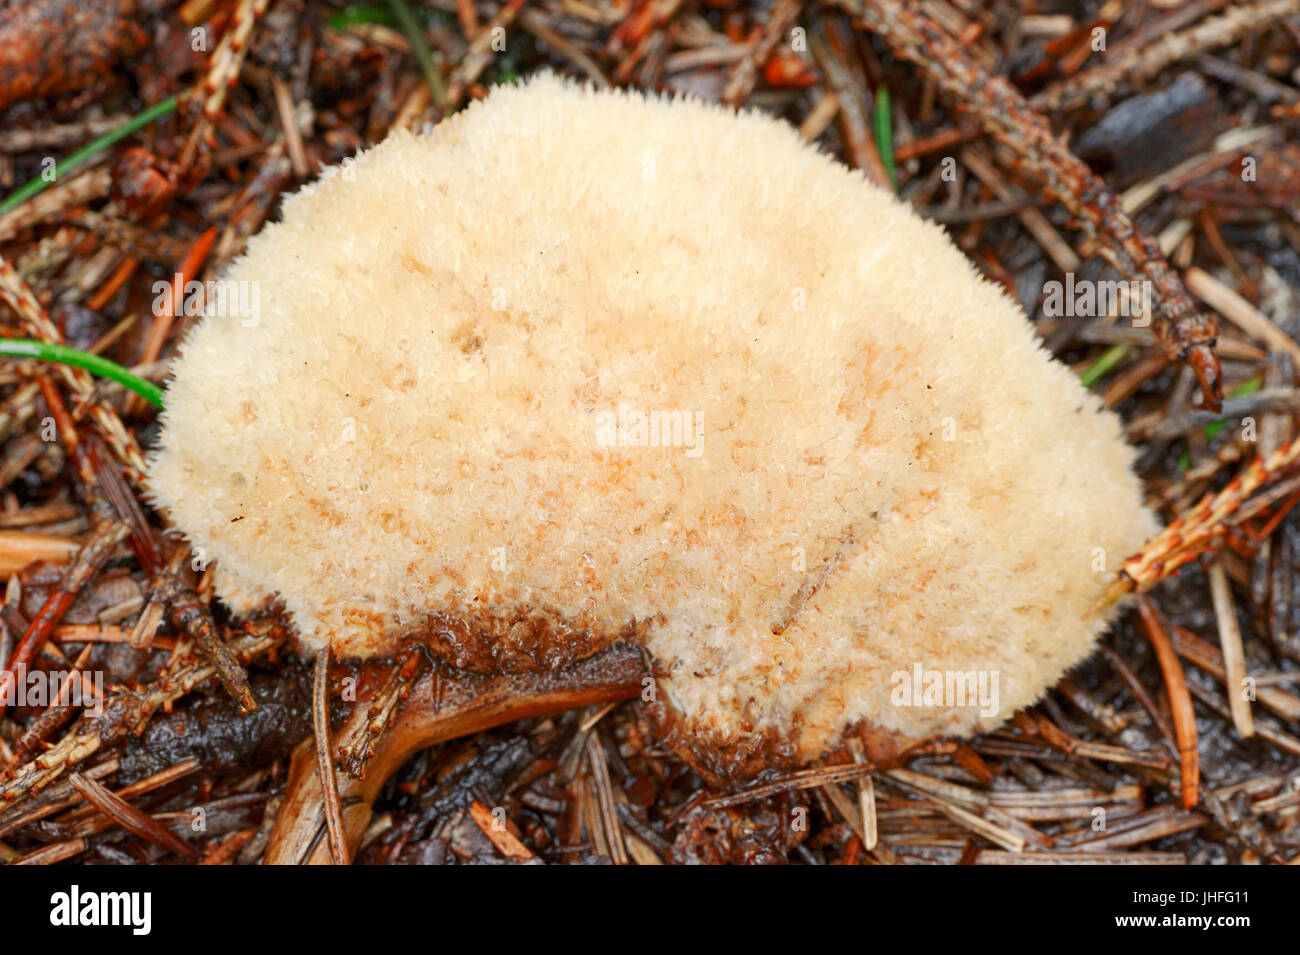 Mushroom, North Rhine-Westphalia, Germany / (Ptychogaster fuliginoides, Tyromyces ptychogaster, Oligoporus ptychogaster, Postia ptychogaster) / Fungi Stock Photo